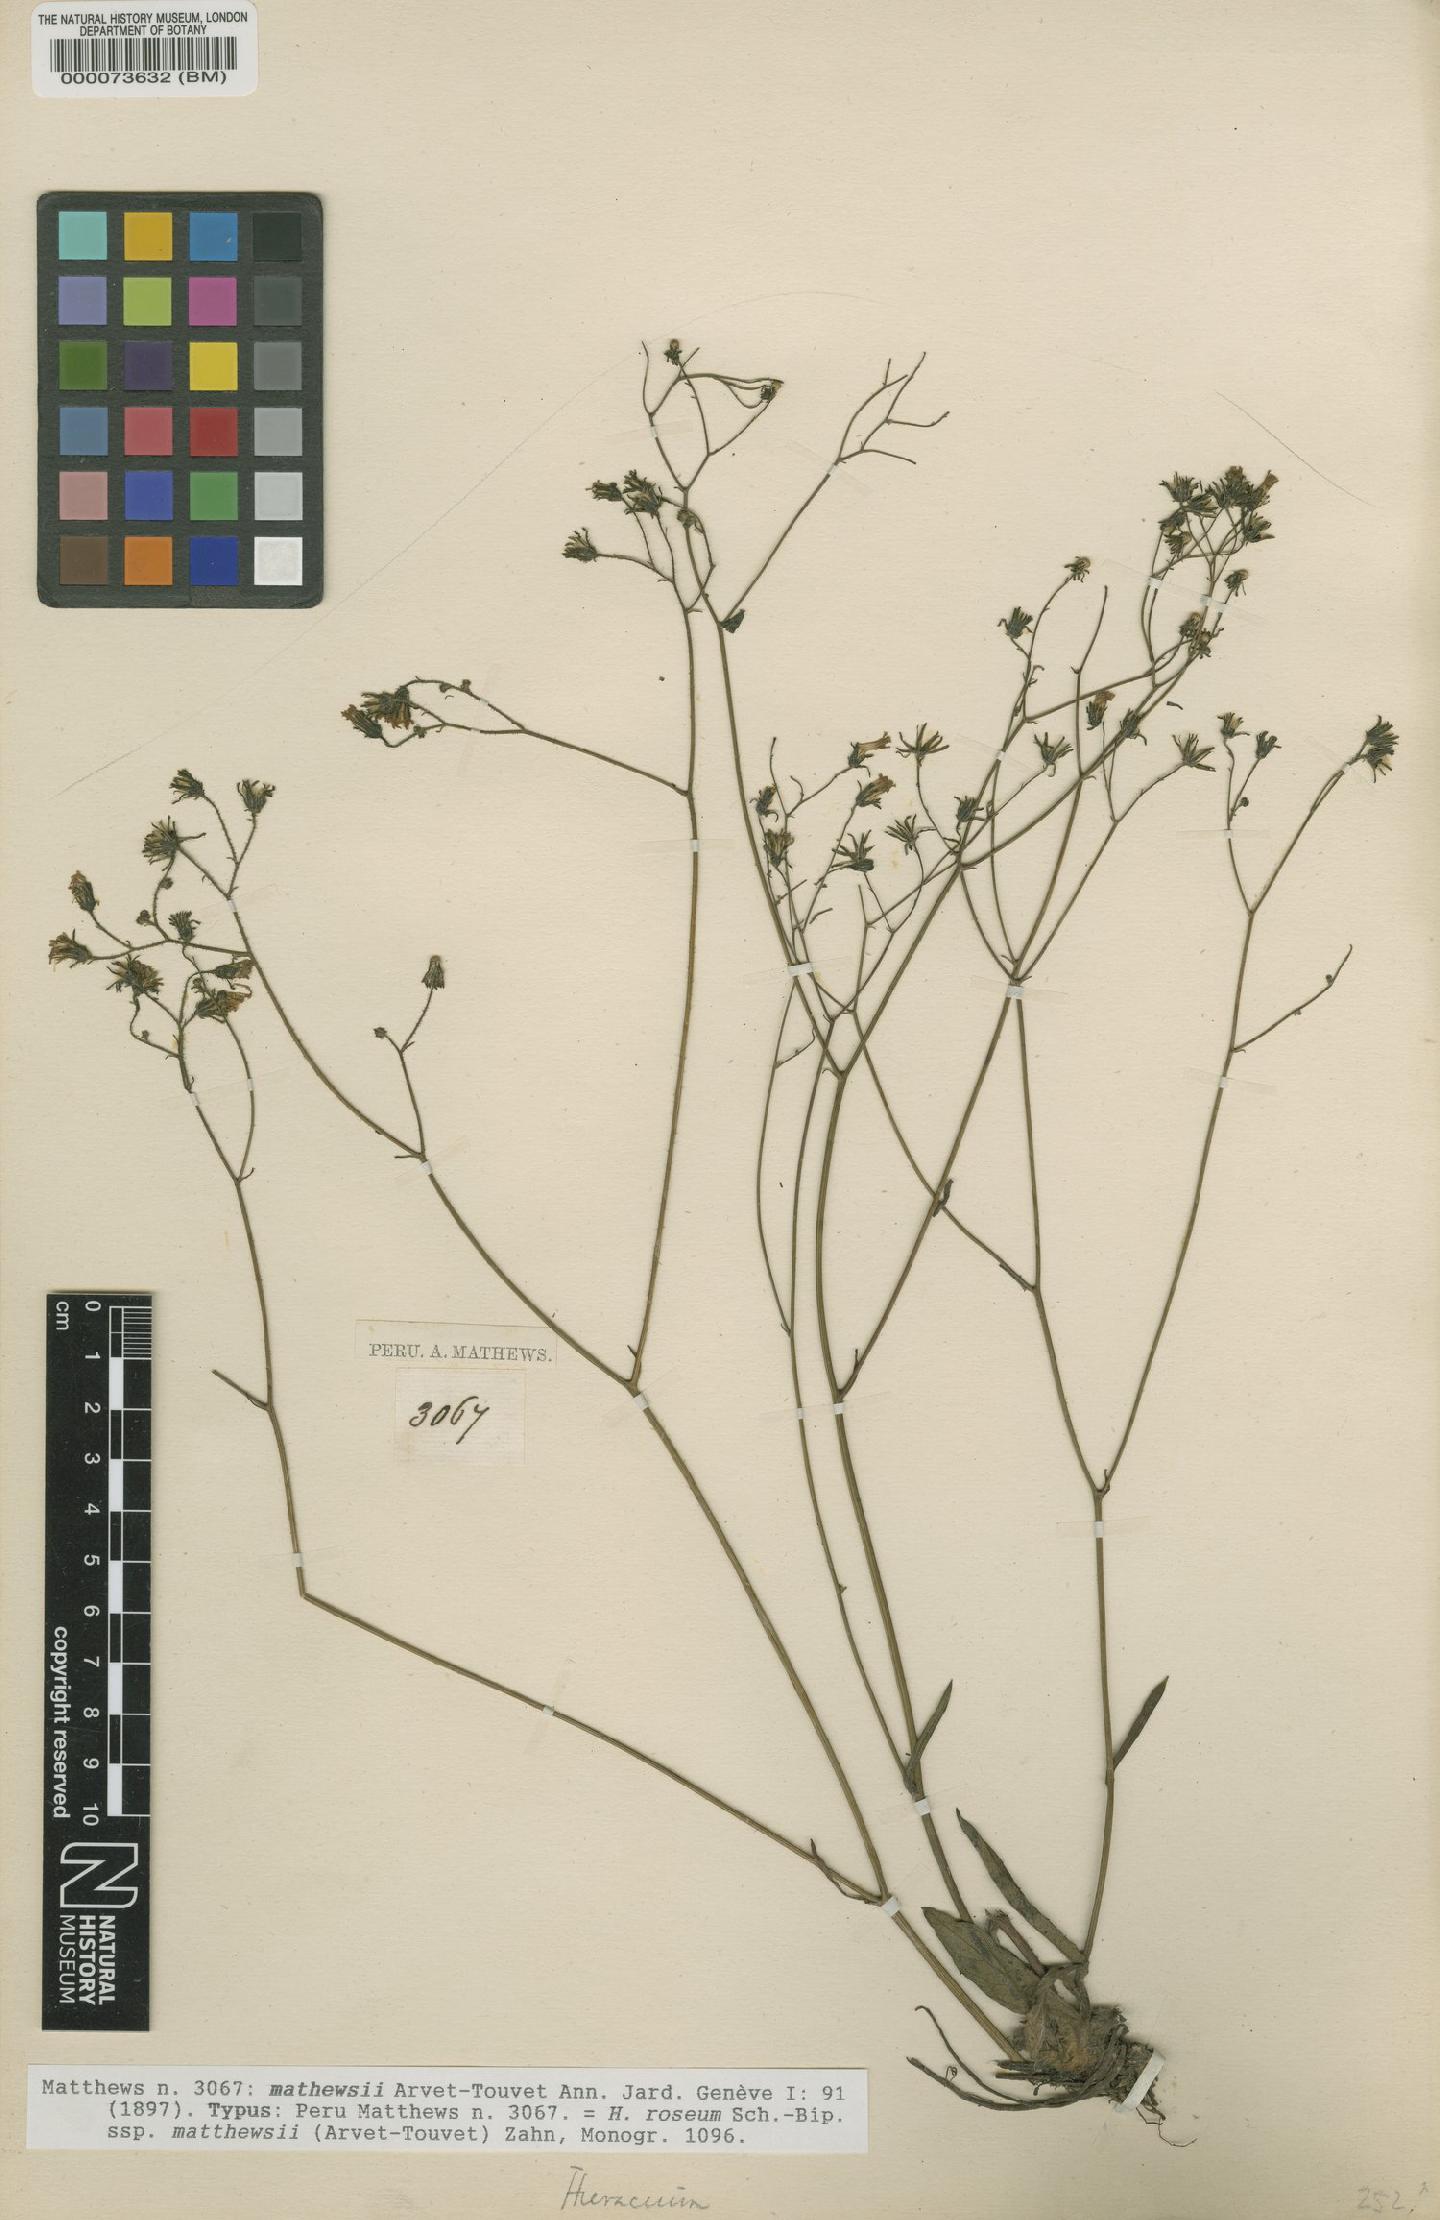 To NHMUK collection (Hieracium mathewsii Arv.-Touv.; Type; NHMUK:ecatalogue:5606037)